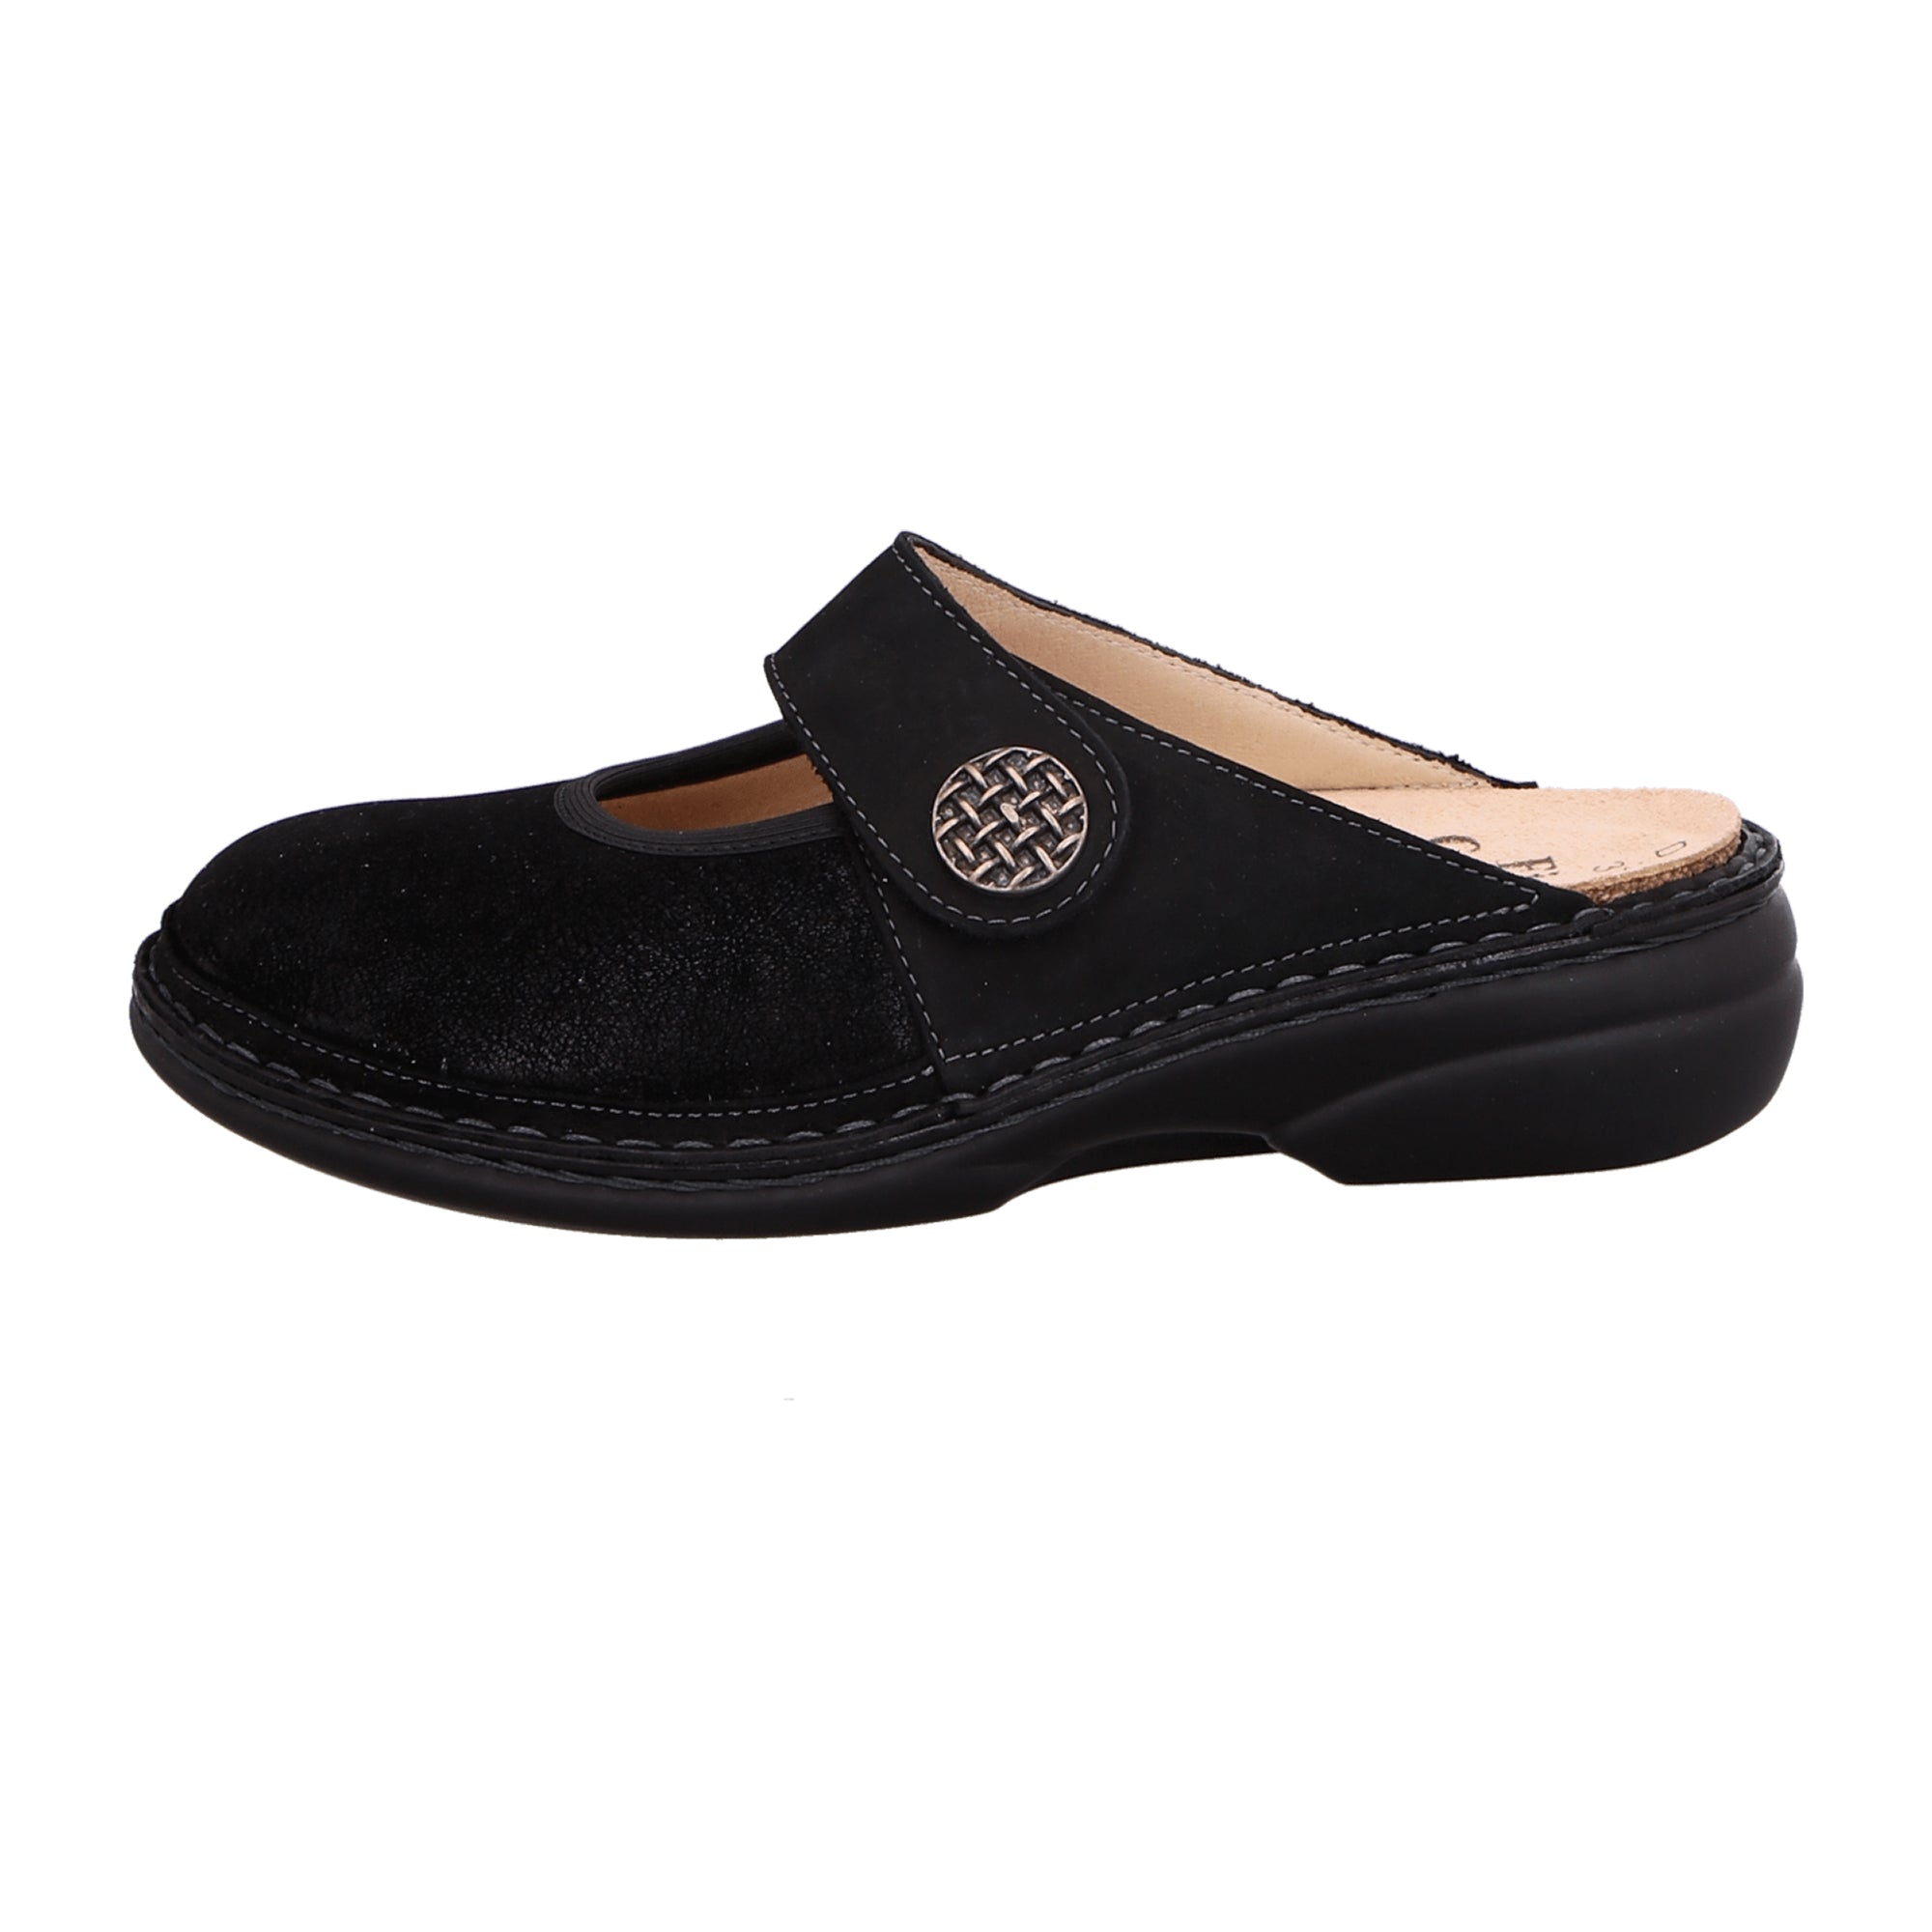 Finn Comfort Asinara Women's Comfort Shoes, Black - Stylish & Durable